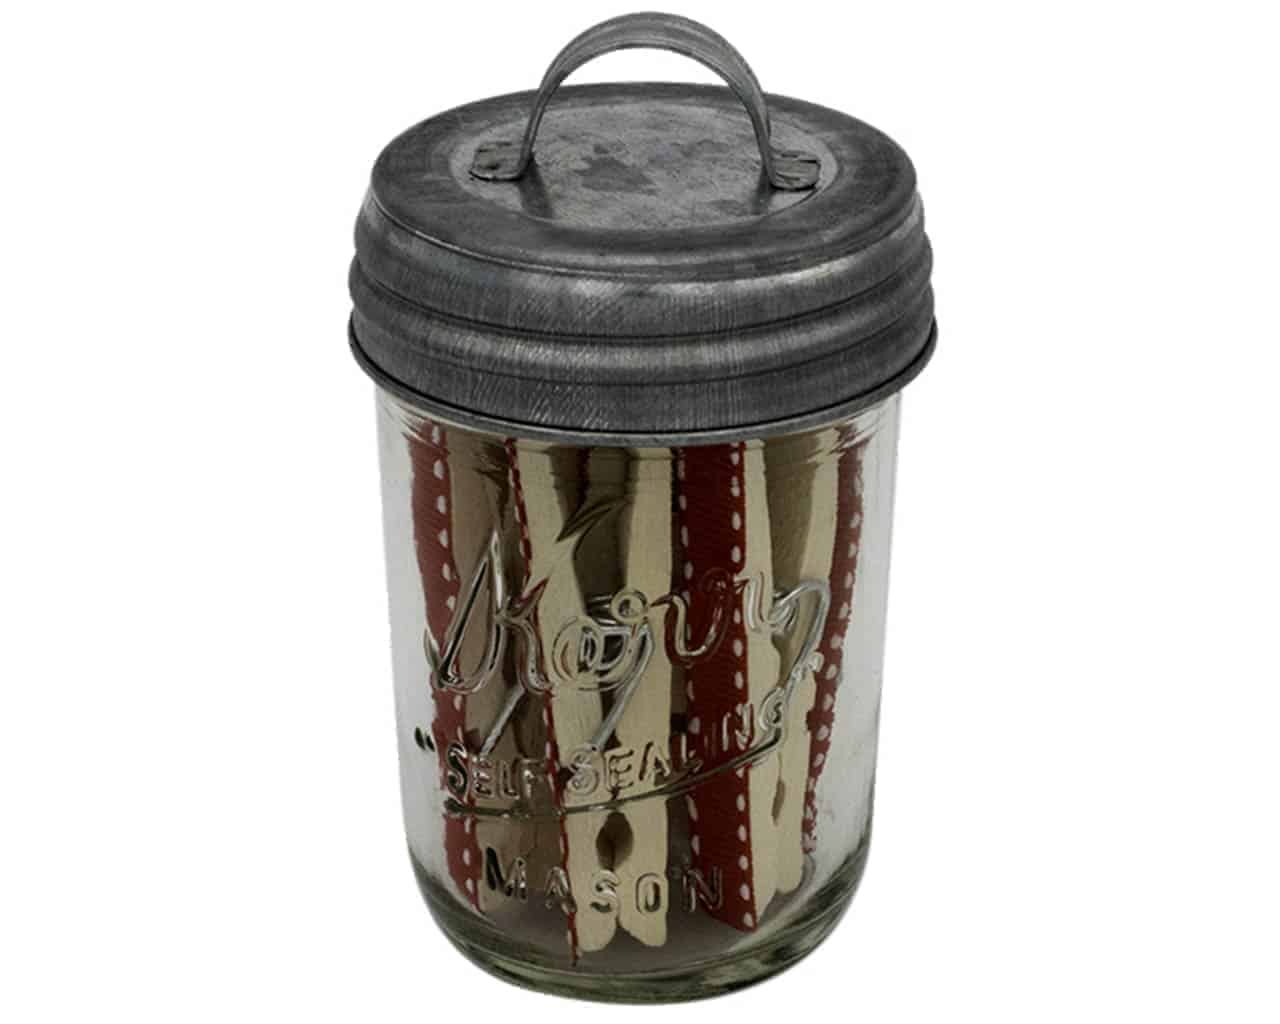 mason-jar-lifestyle-antique-galvanized-zinc-handle-canister-lid-regular-mouth-kerr-half-pint-8oz-mason-jar-clothespins